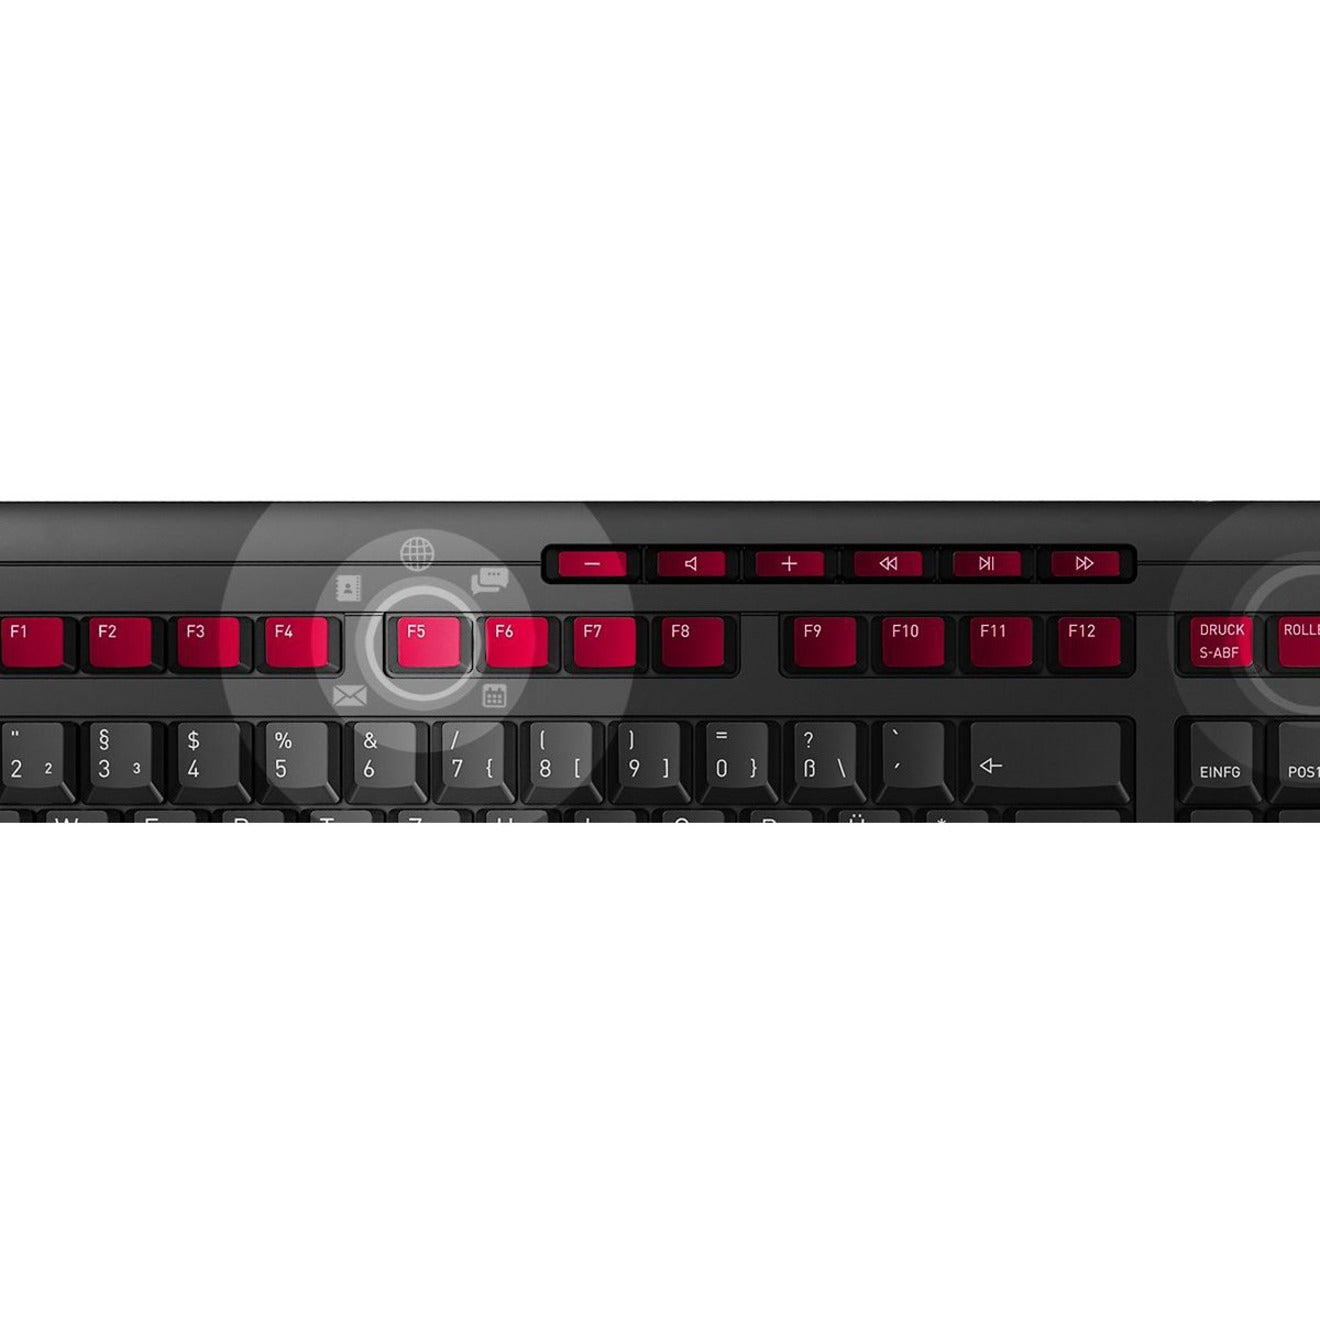 CHERRY JD-0800EU-2 DC 2000 Keyboard & Mouse Set, Wired, Black - LED Indicator, Plug & Play